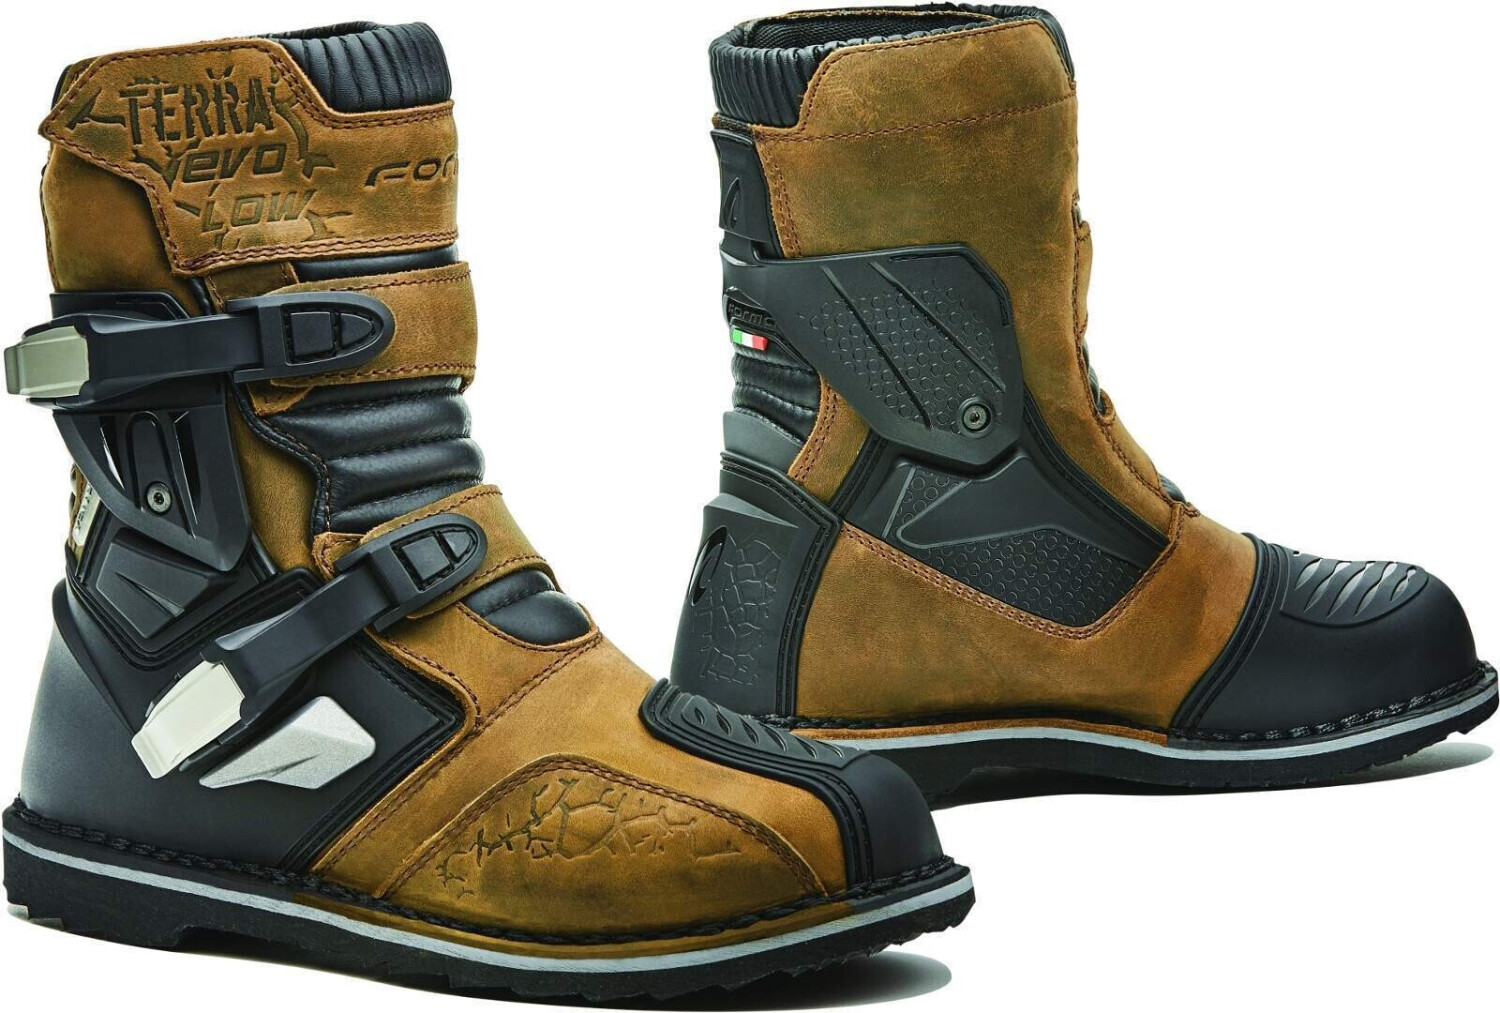 buy-forma-boots-terra-evo-low-brown-from-155-10-today-best-deals